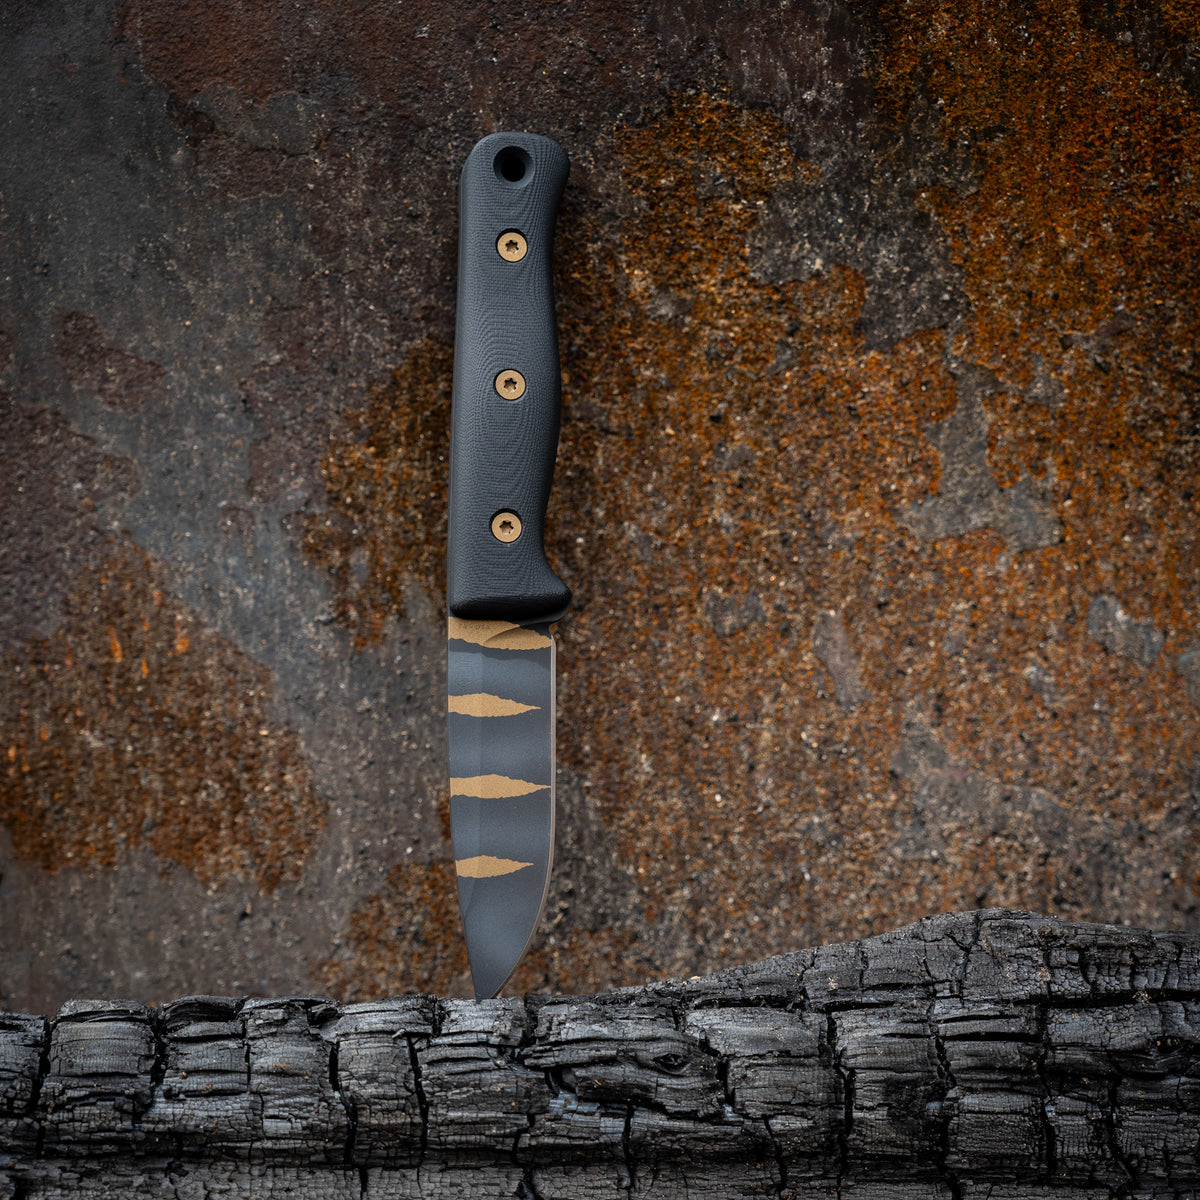 F4 Bushcraft Survival Knife (Limited Edition Rip Torn Blade, CPM 3V, Black G10)